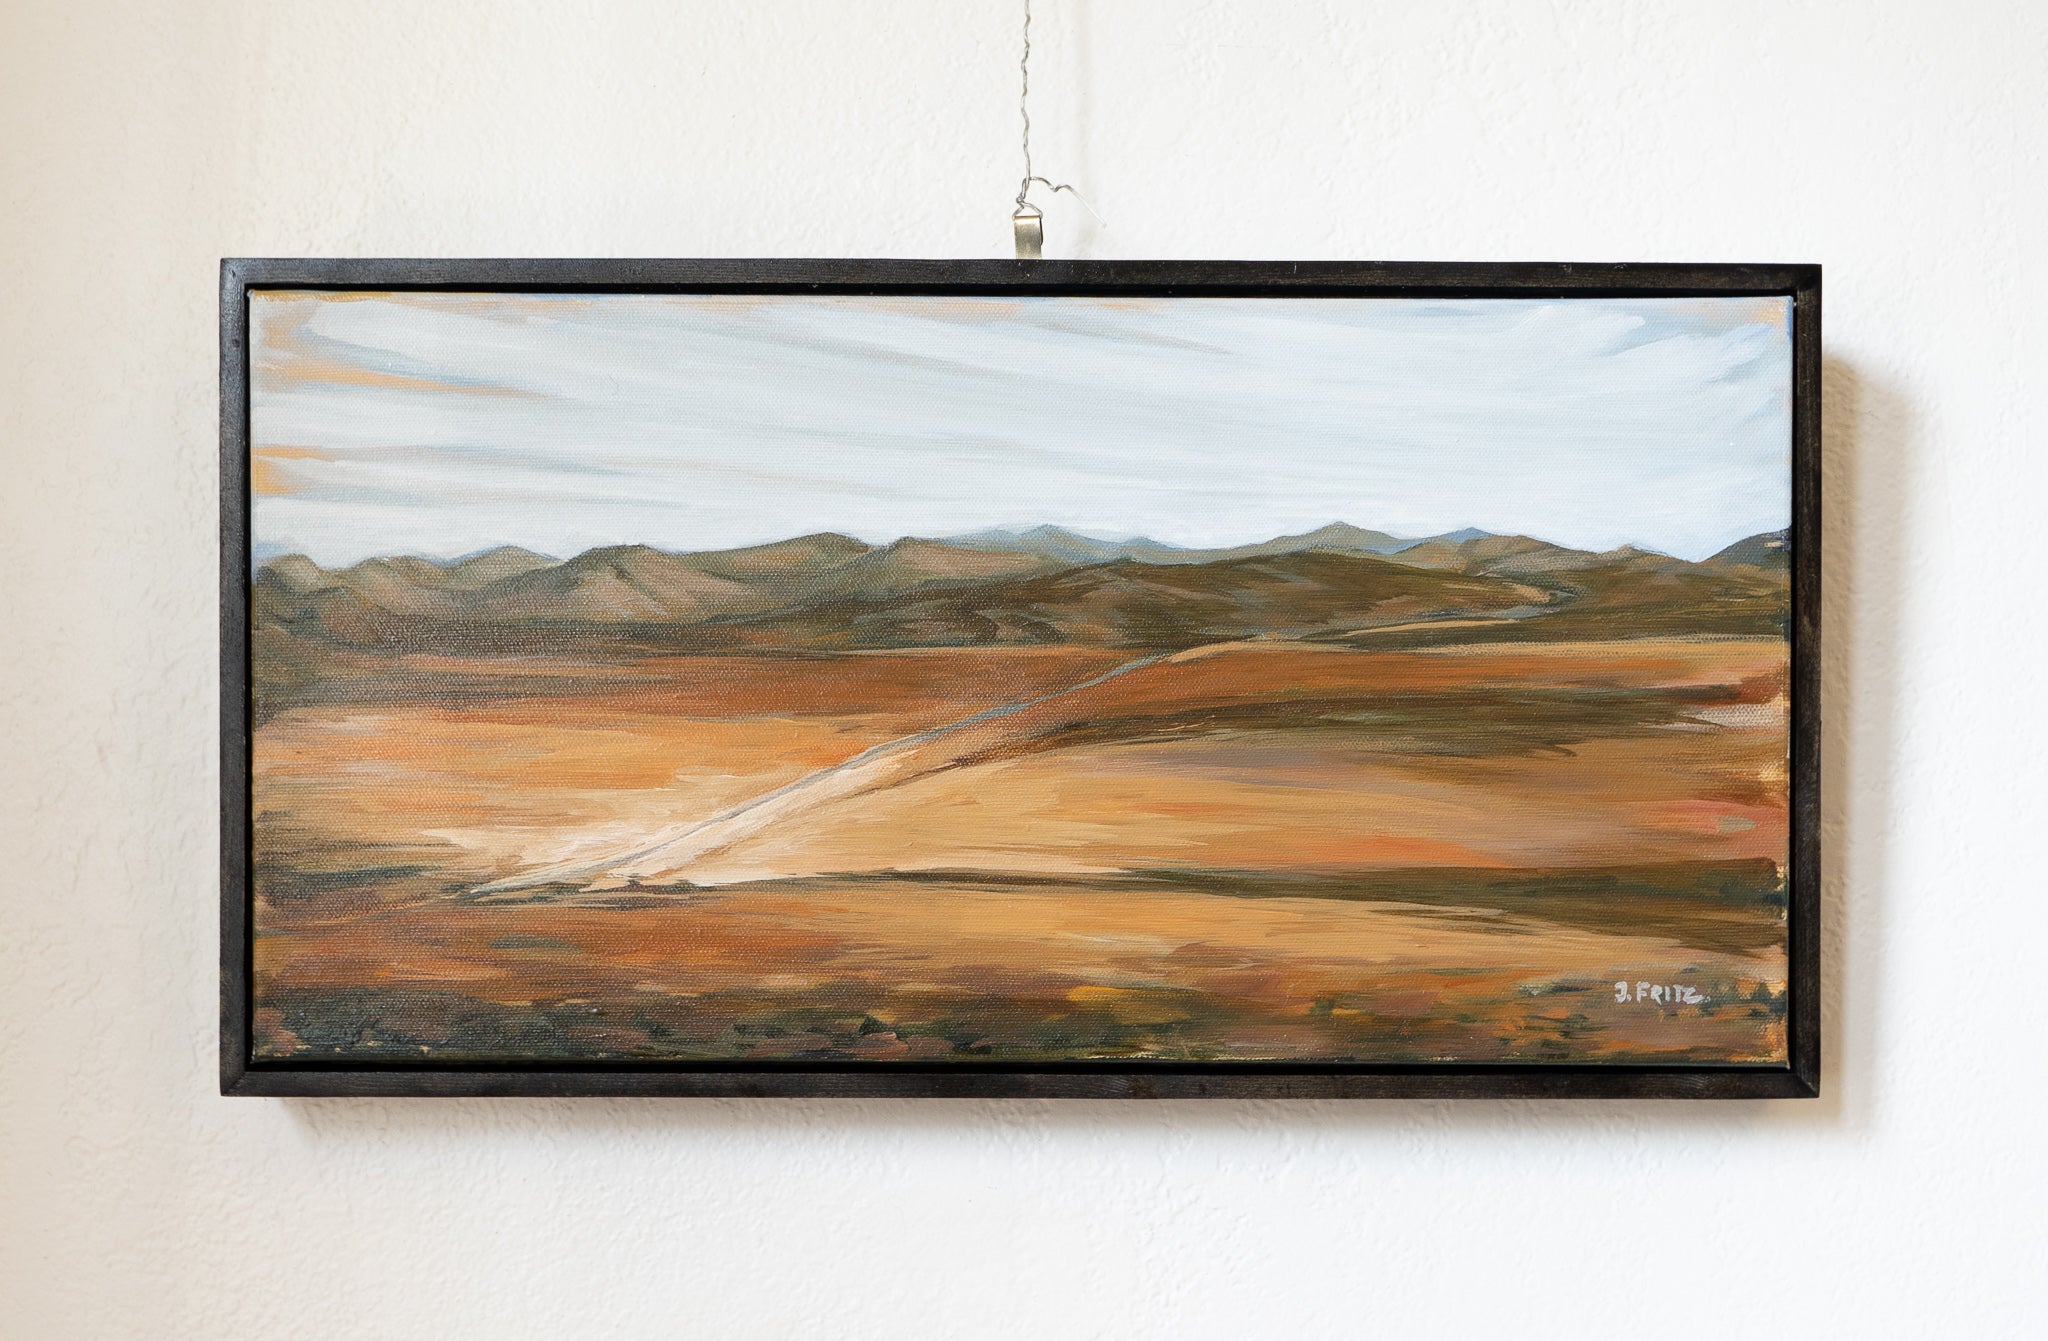 Jordan Art | Desert Paintings | Palm Springs Art Galleries